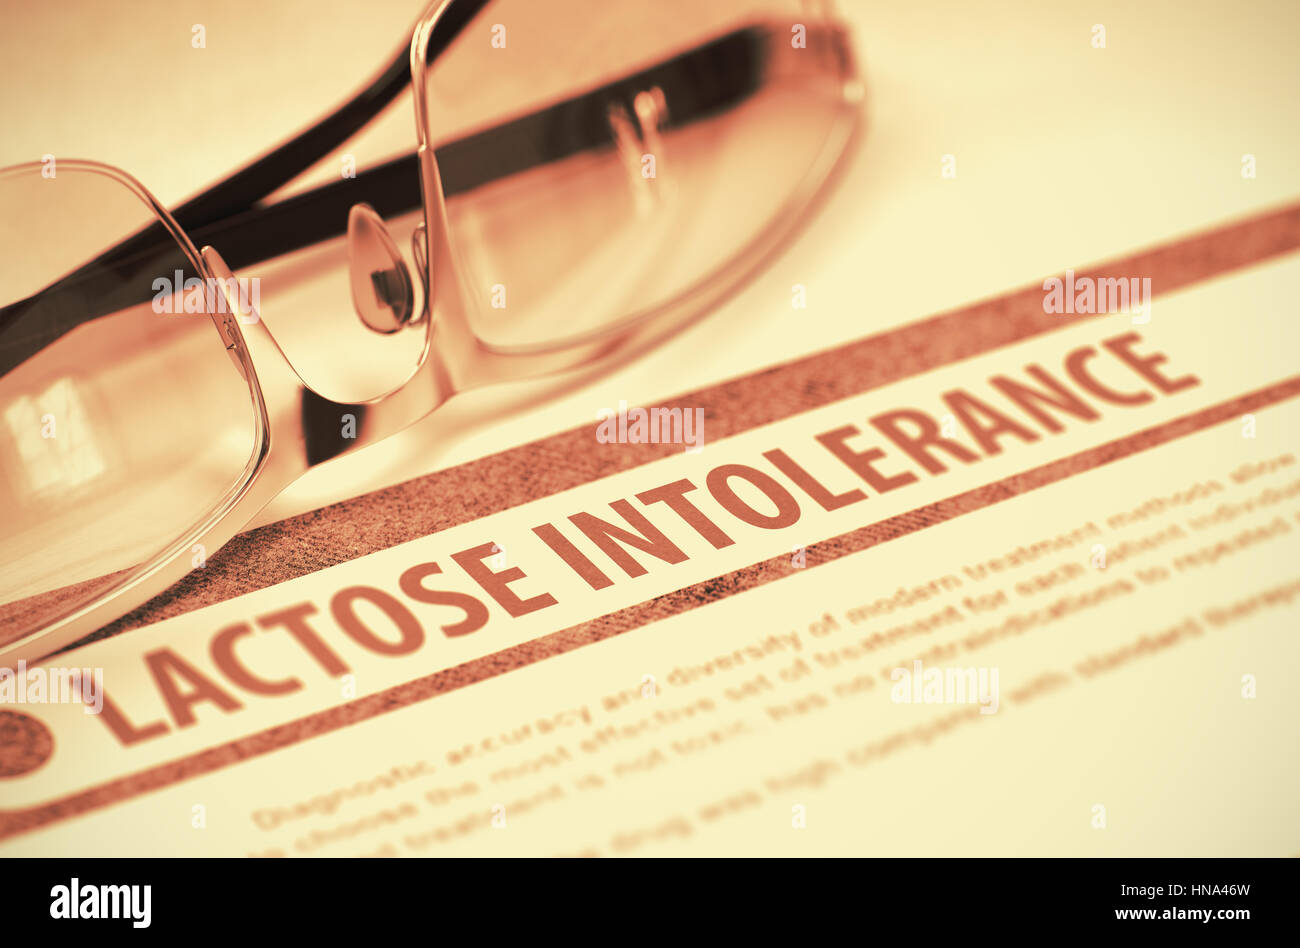 Lactose Intolerance. Medicine. 3D Illustration. Stock Photo